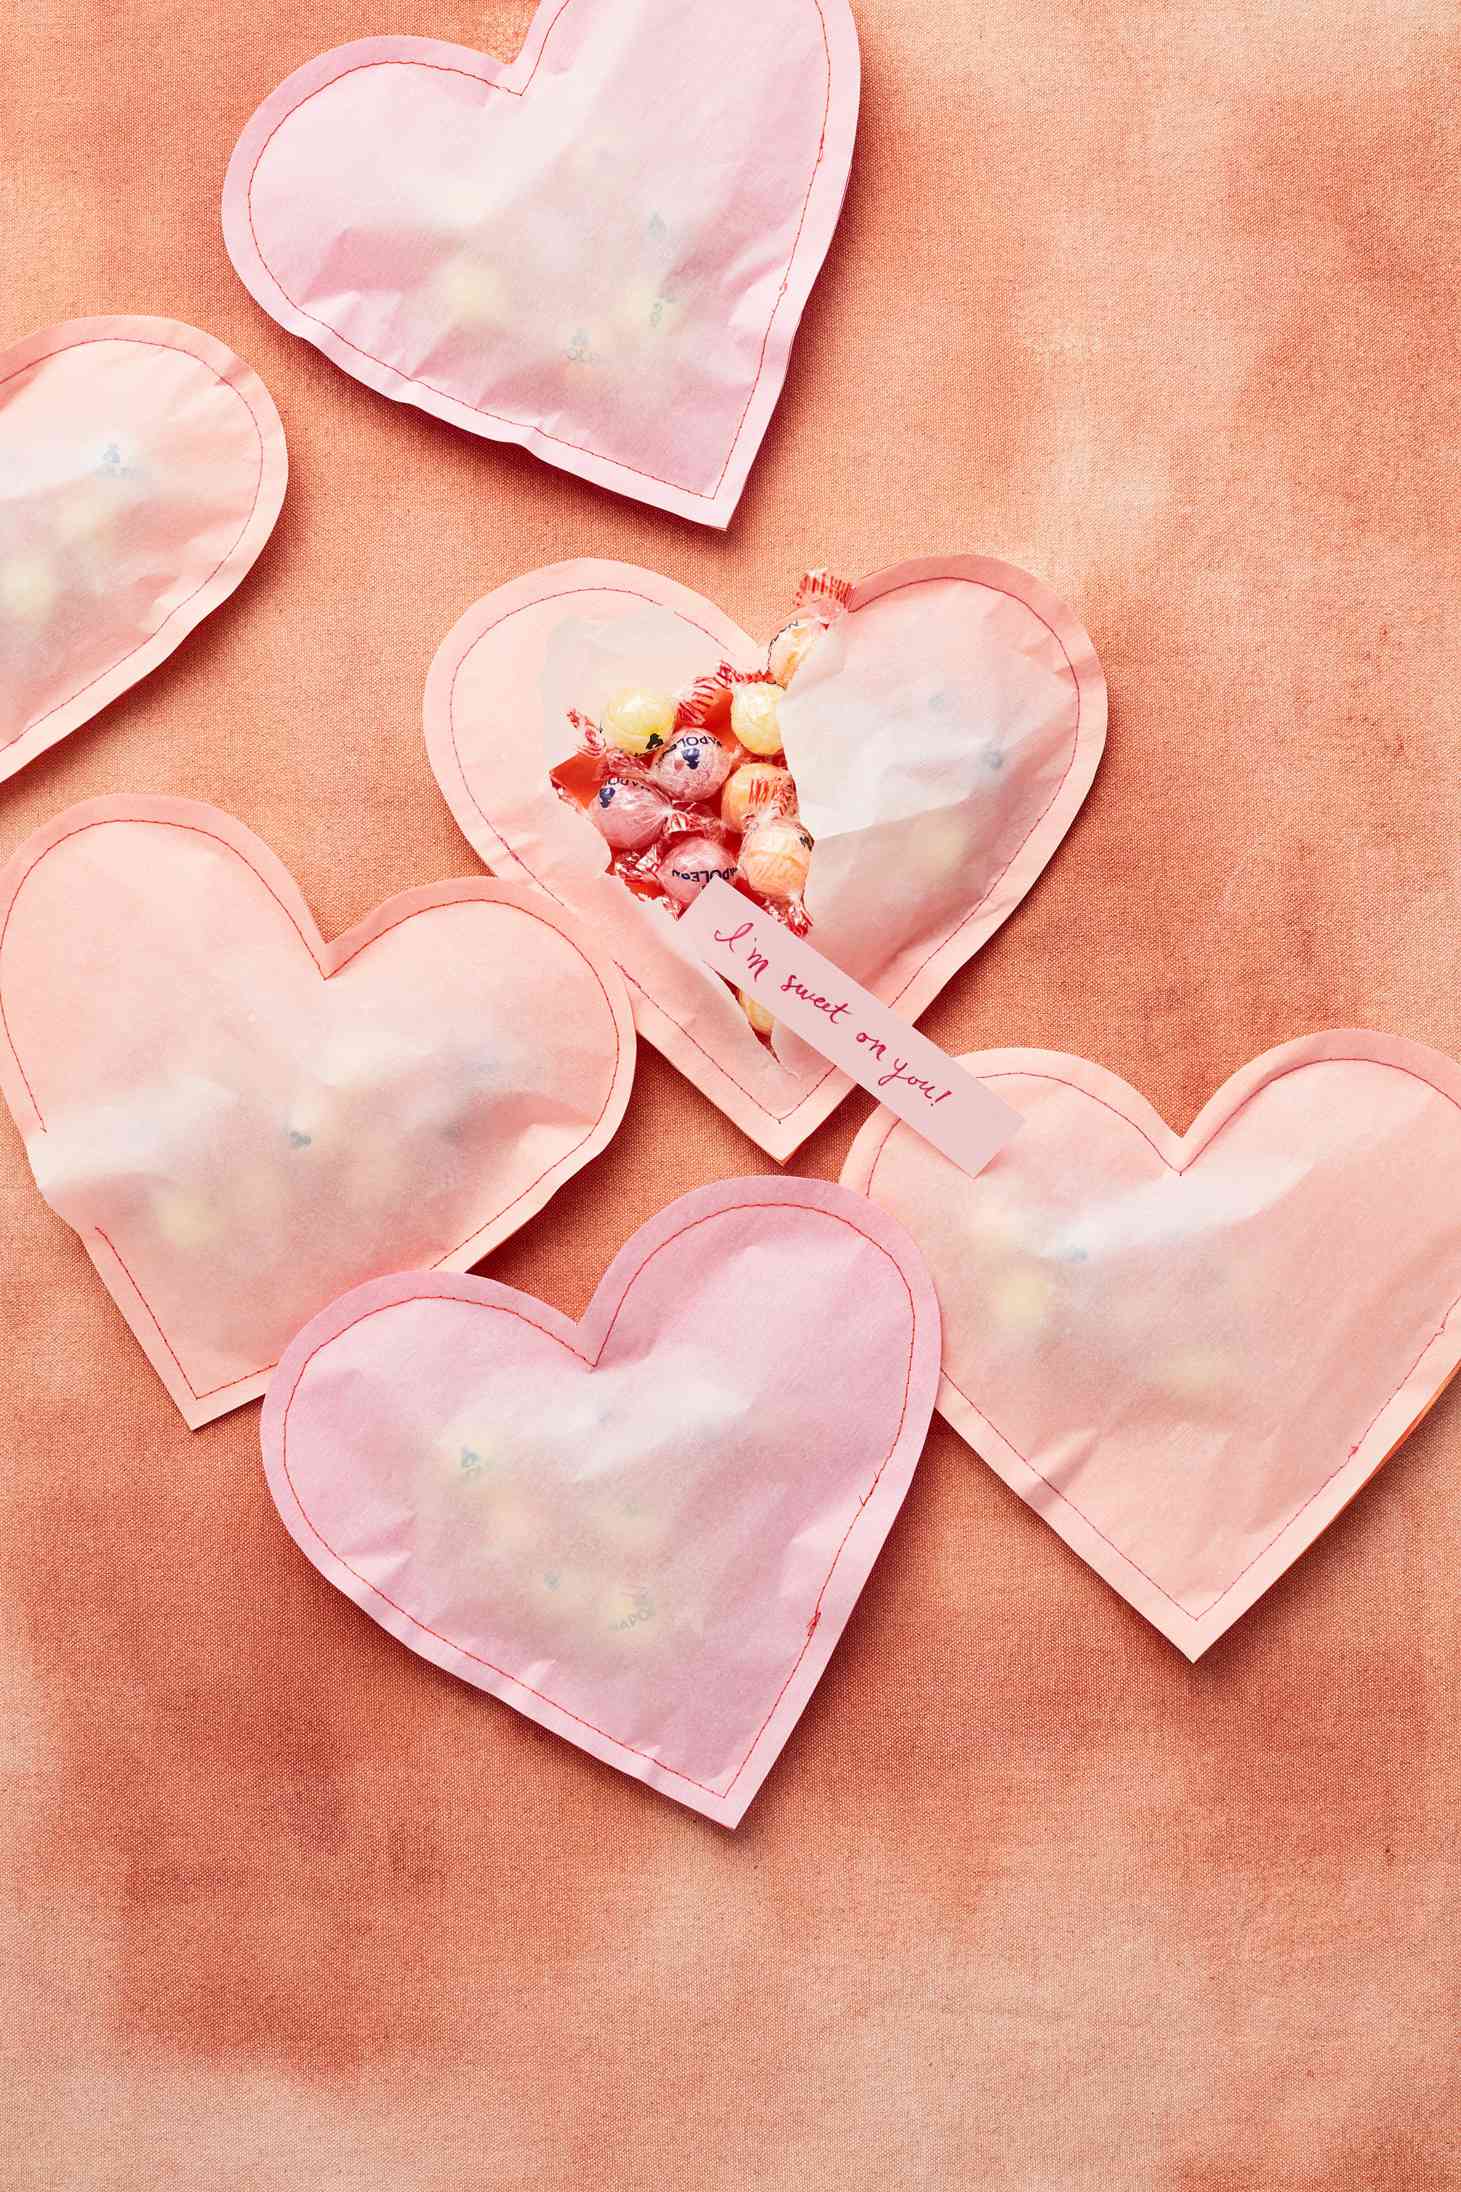 4 Shapes Wooden Hearts Craft Art Supplies Decoration Wedding Love Valentine Day 